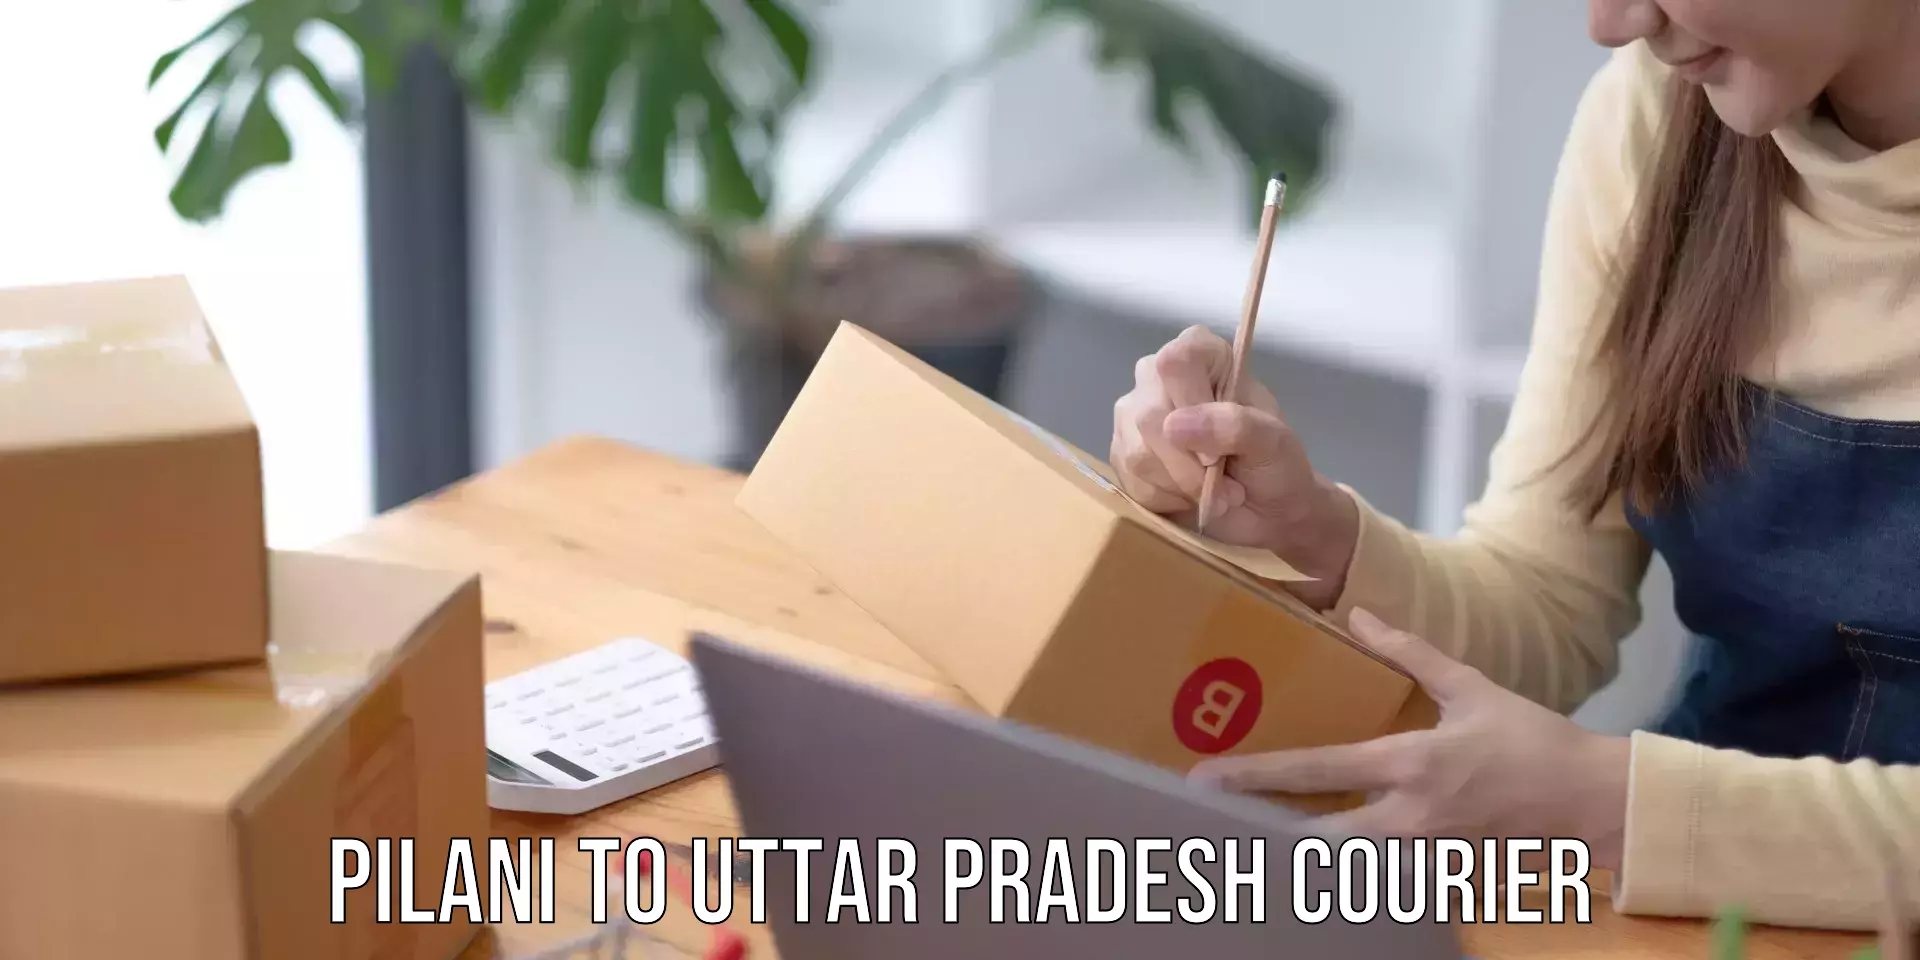 Nationwide delivery network Pilani to Uttar Pradesh